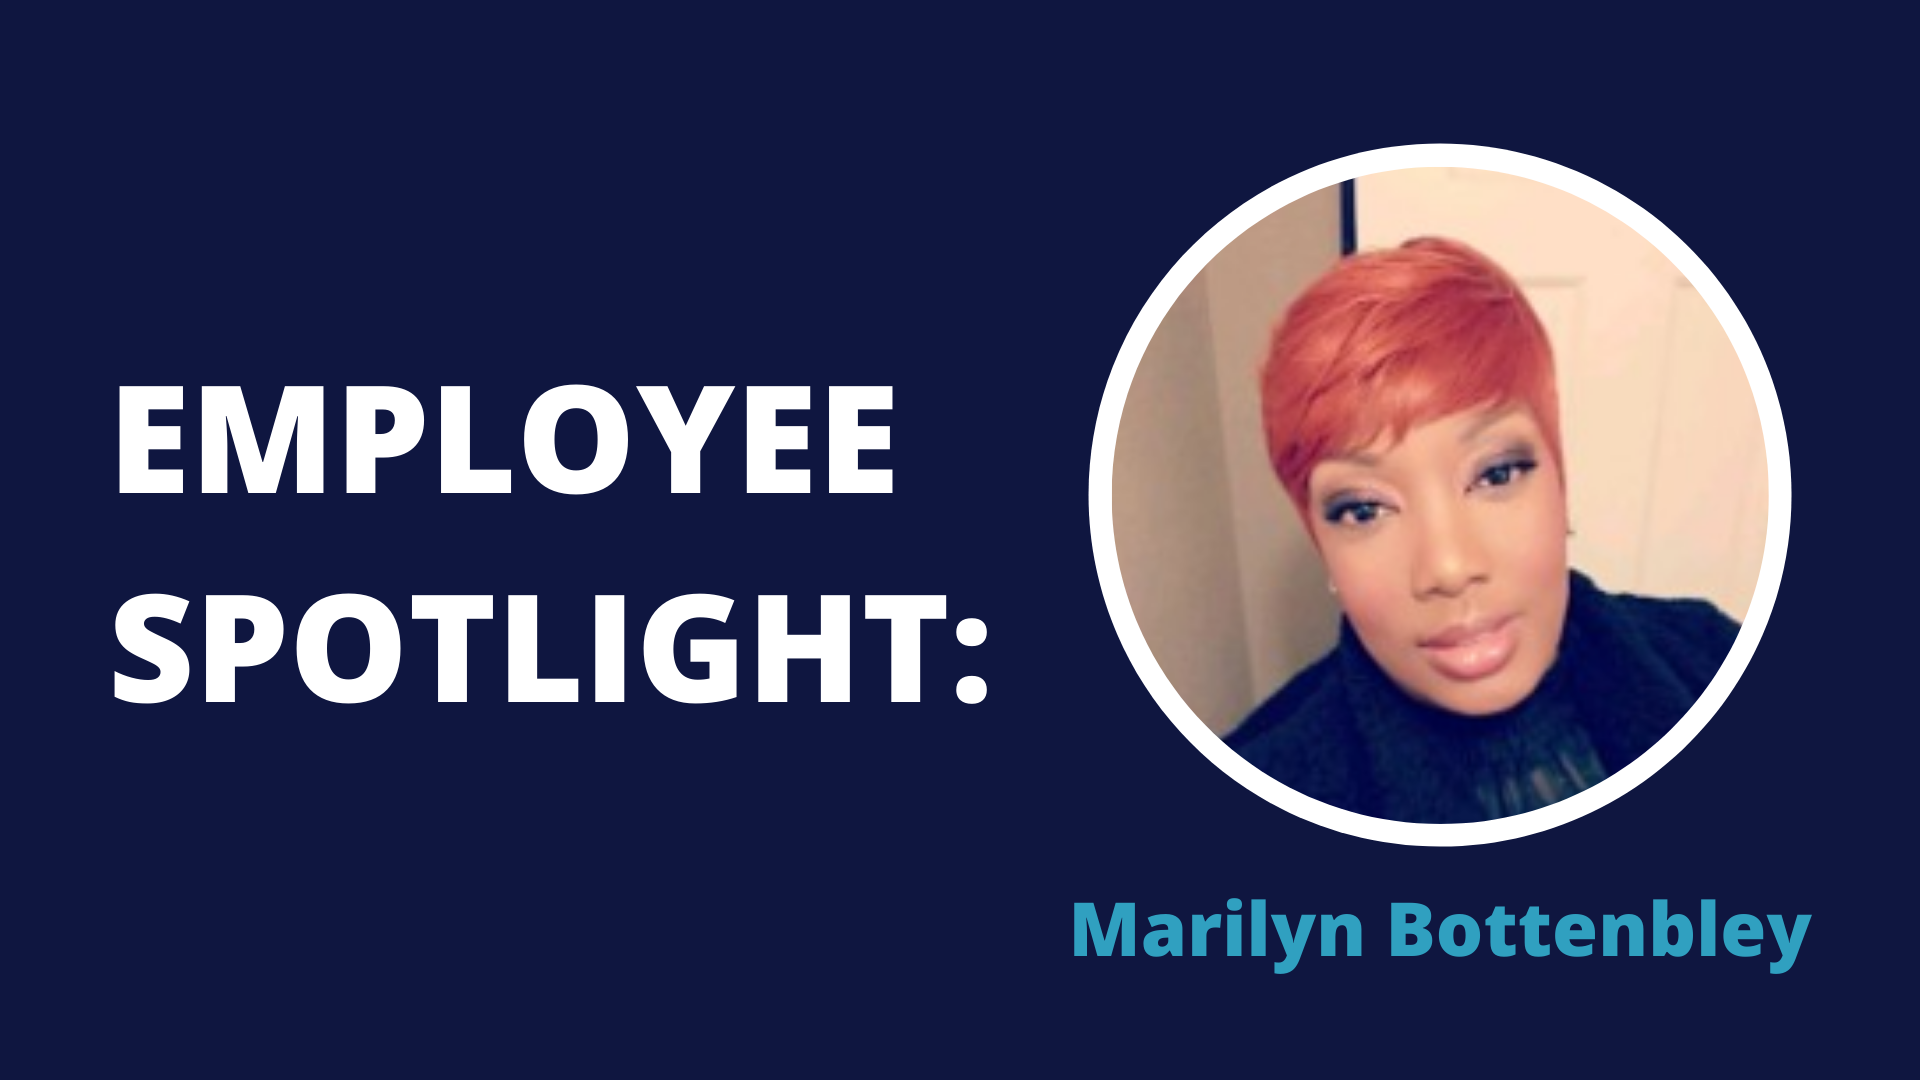 Marilyn Bottenbley Employee Spotlight